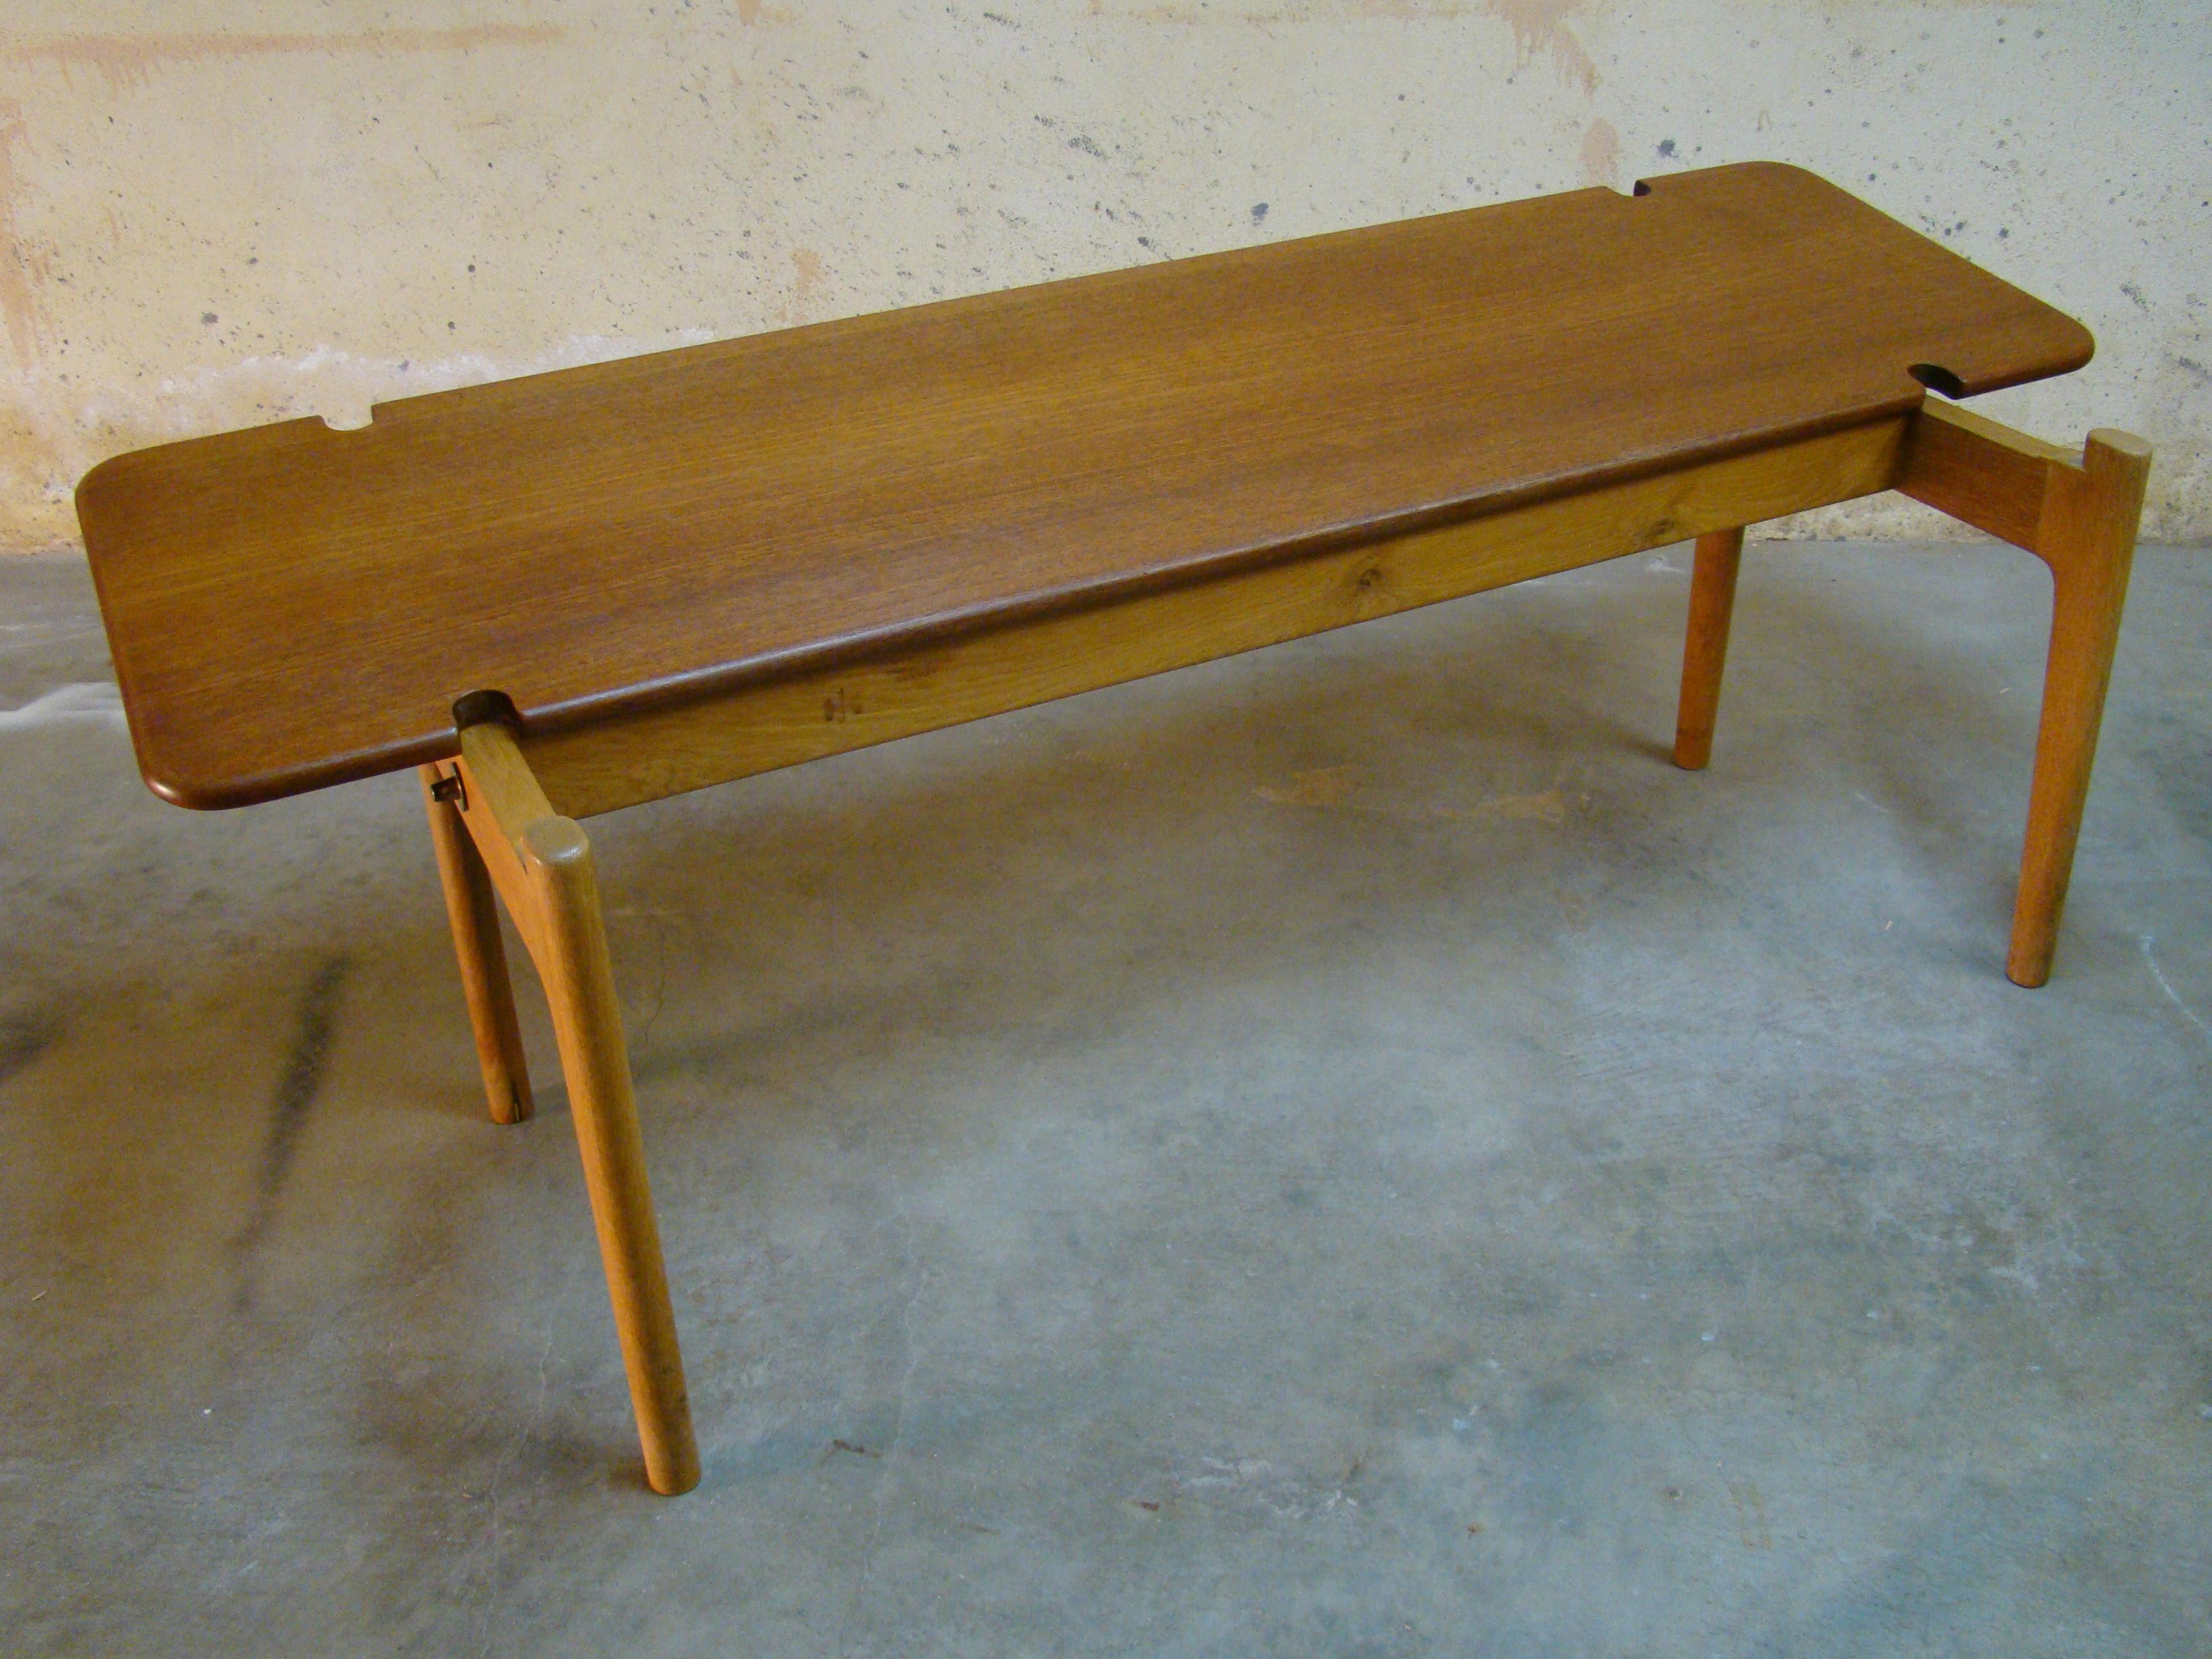 Original Hans Wegner reversible, flip-top bench coffee table, circa 1950s, with a golden quarter sawn oak leg assembly and warm teak 